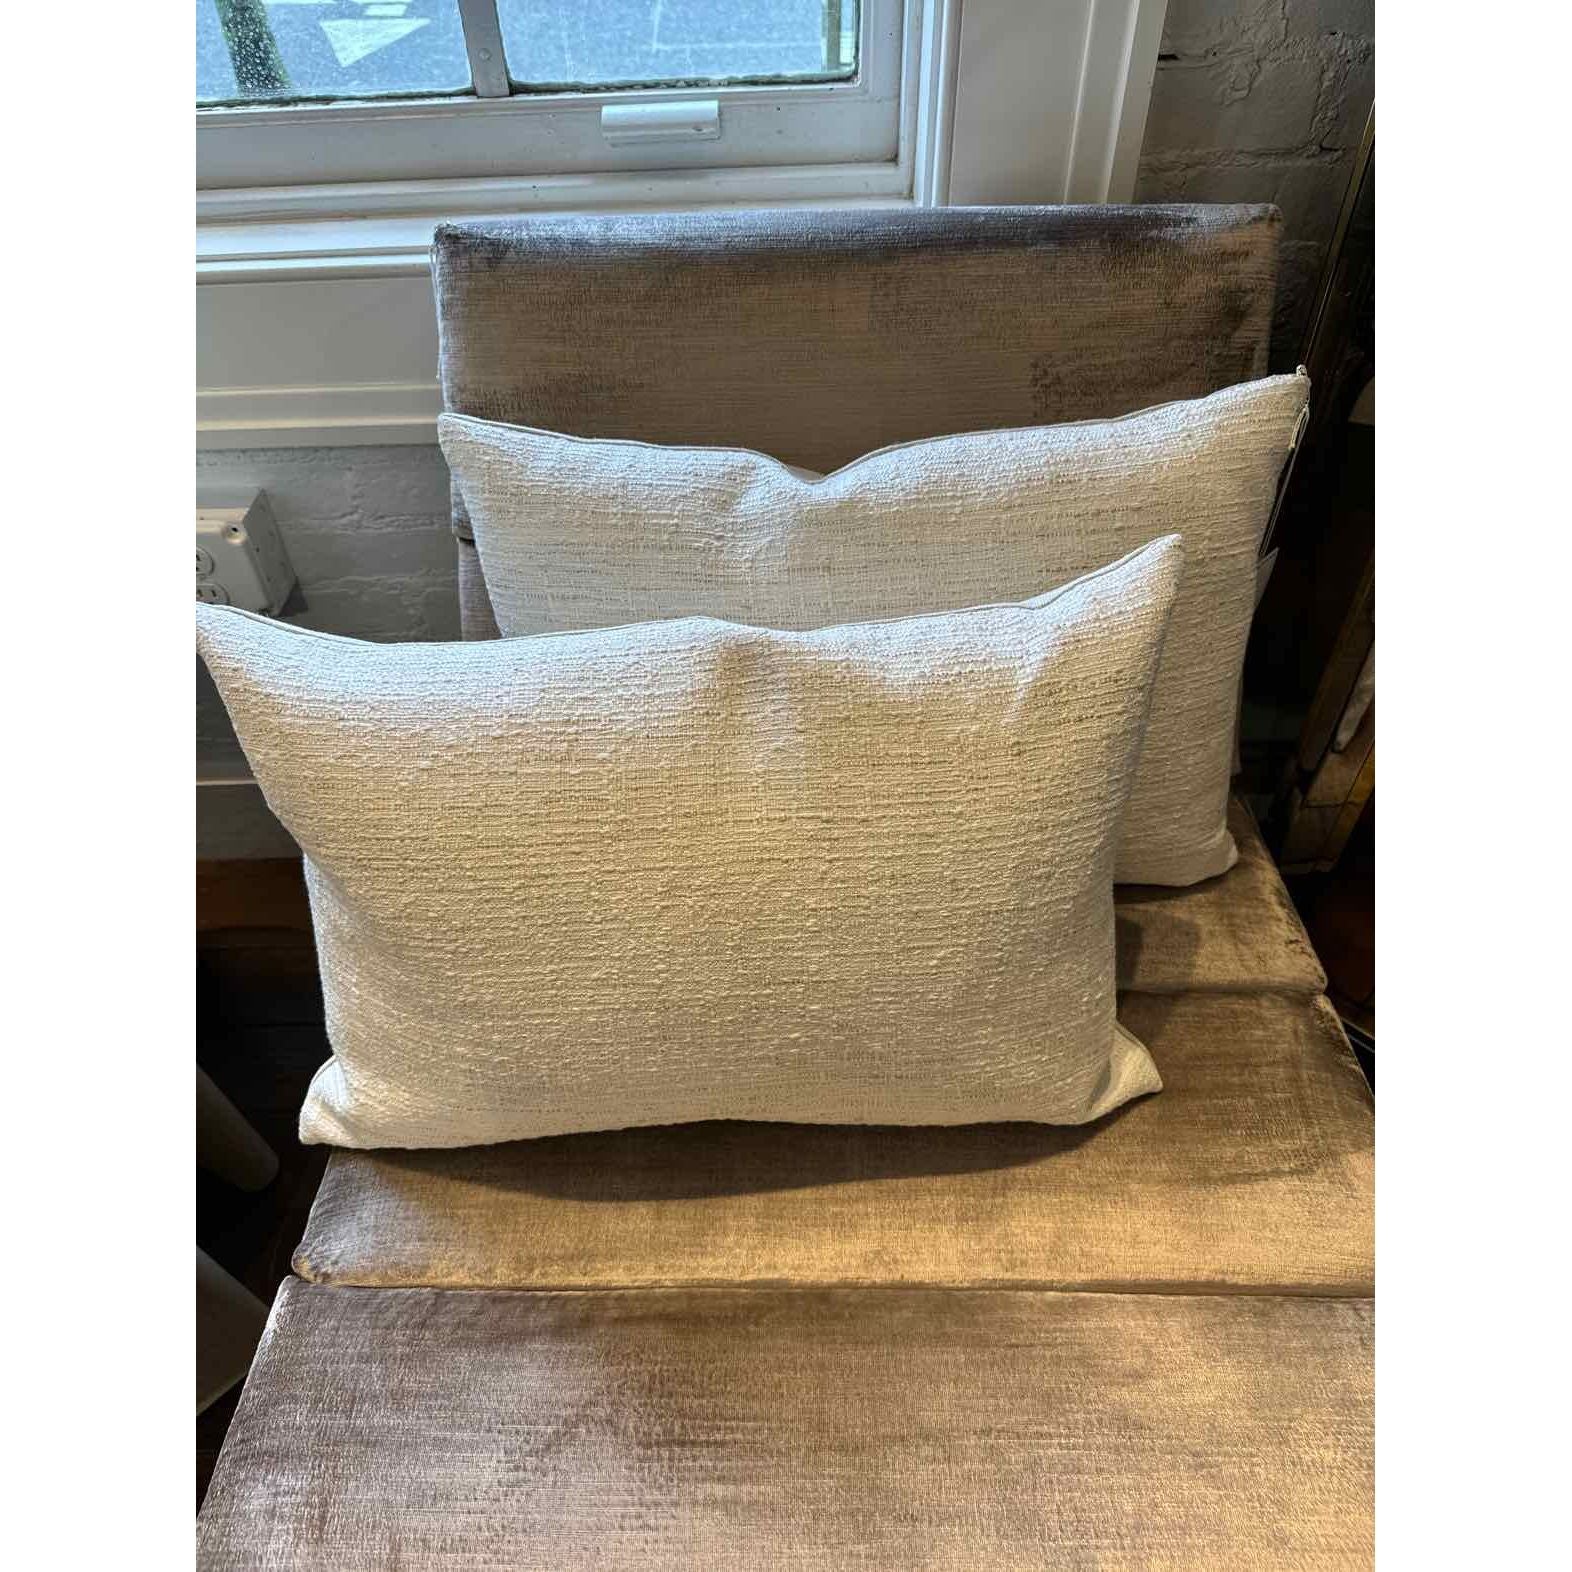 Pair of White Belgian Linen Lumbar Pillows 22"x14"